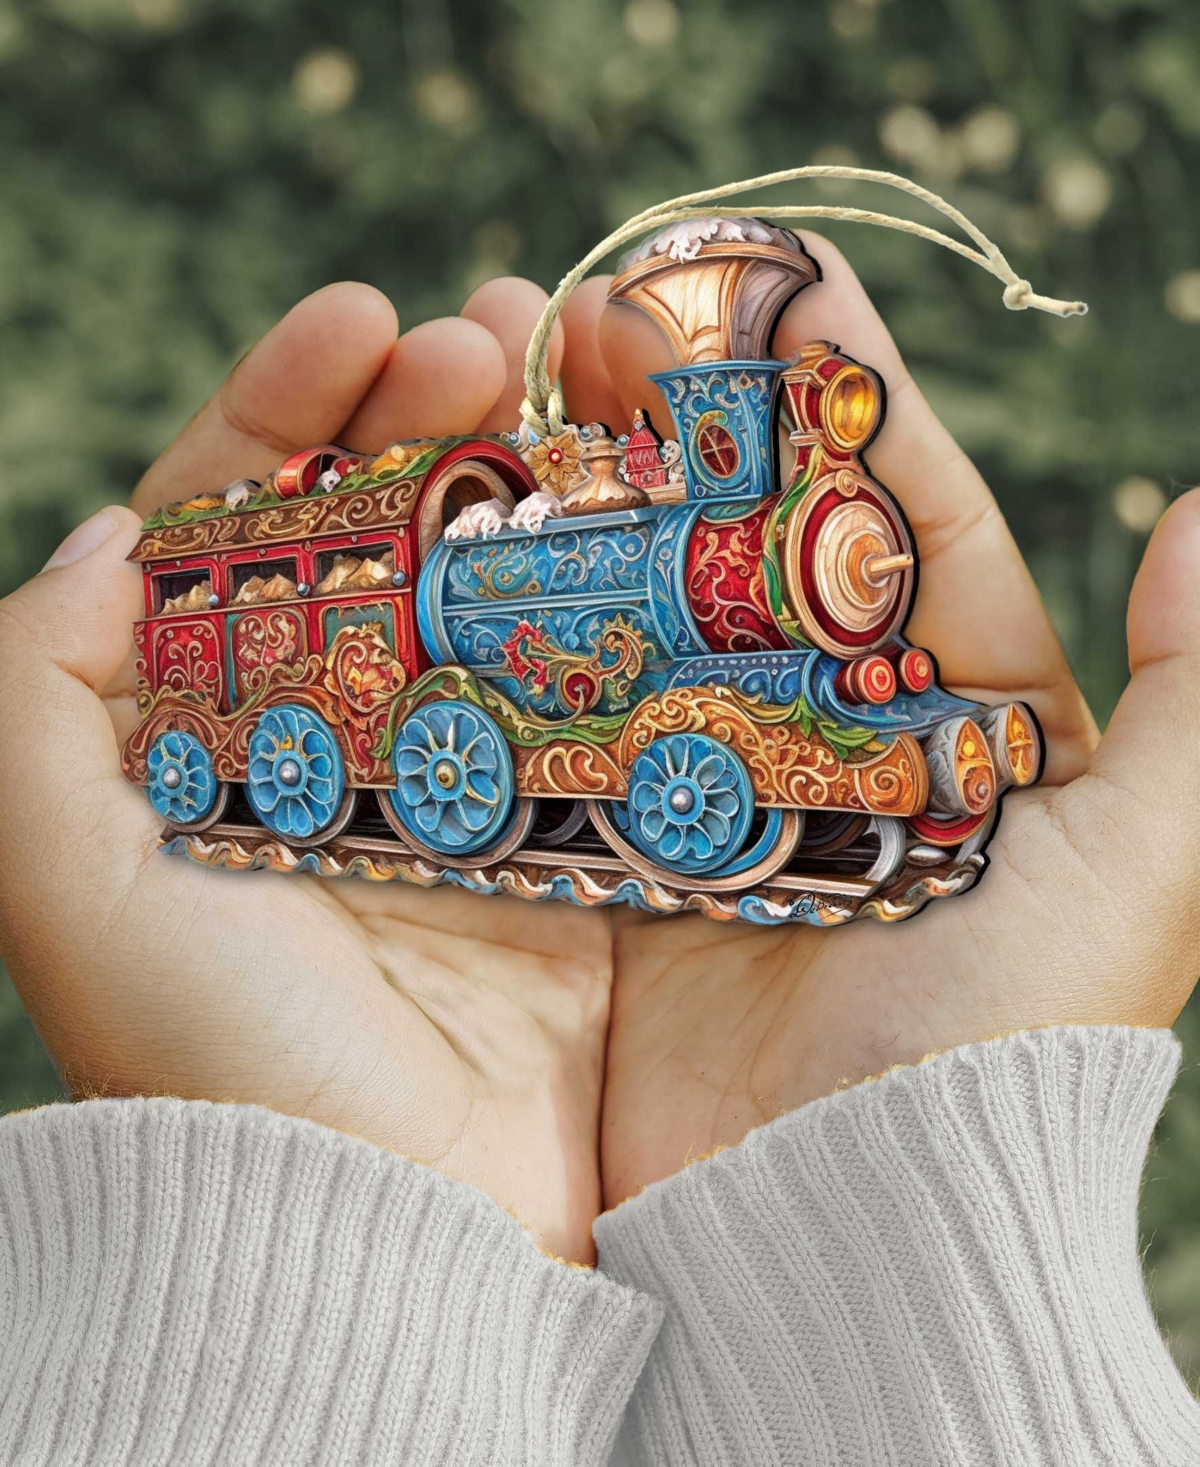 Shop Designocracy Christmas Train Christmas Wooden Ornaments Holiday Decor G. Debrekht In Multi Color